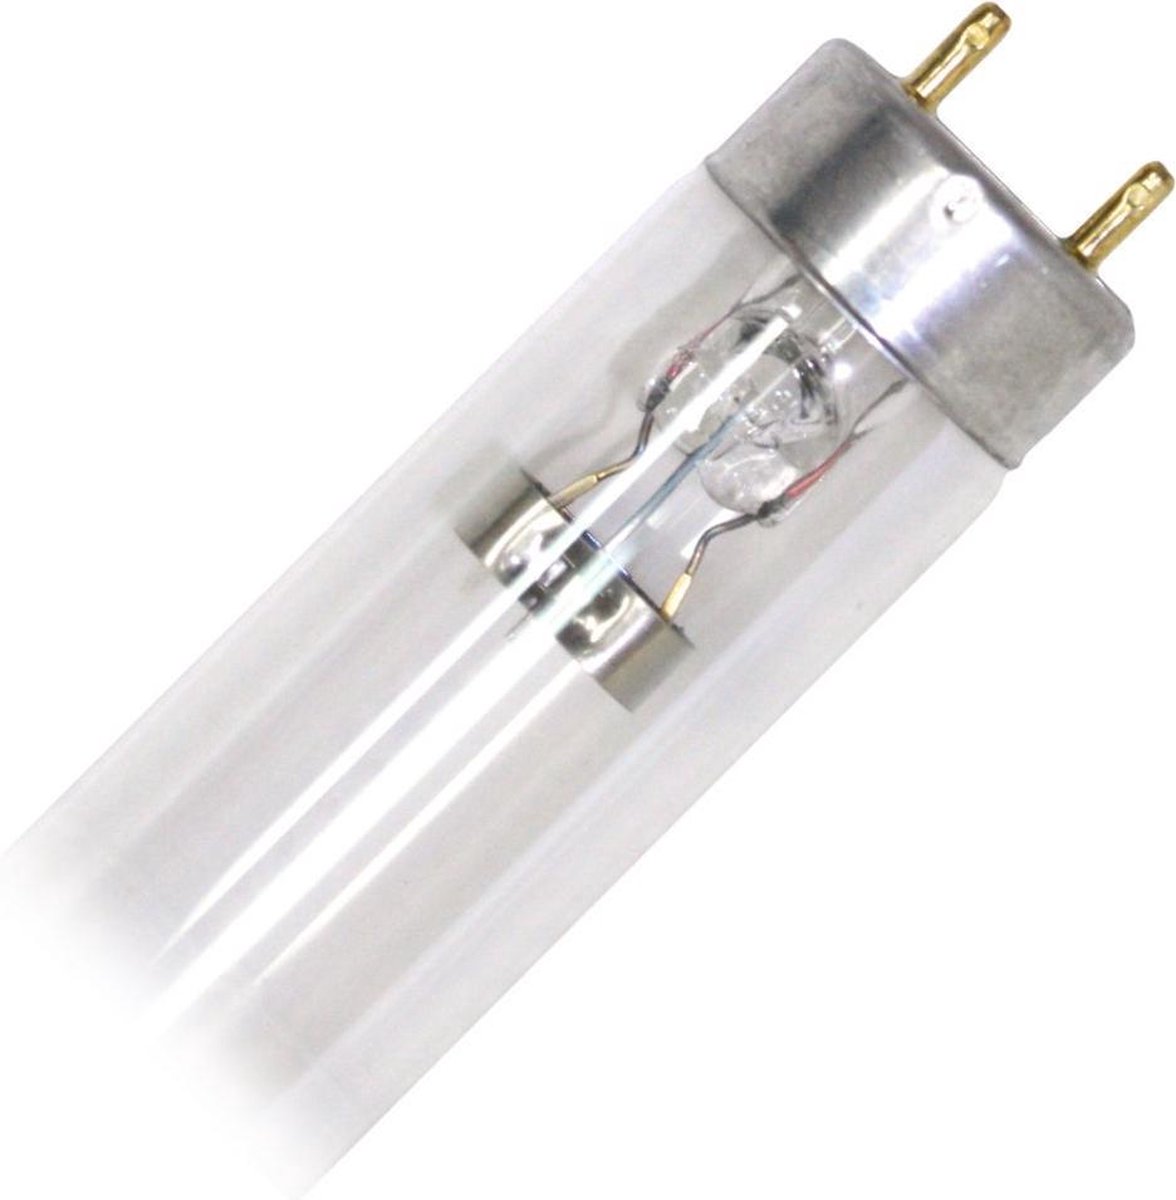 Philips TL lamp UV-C 16Watt